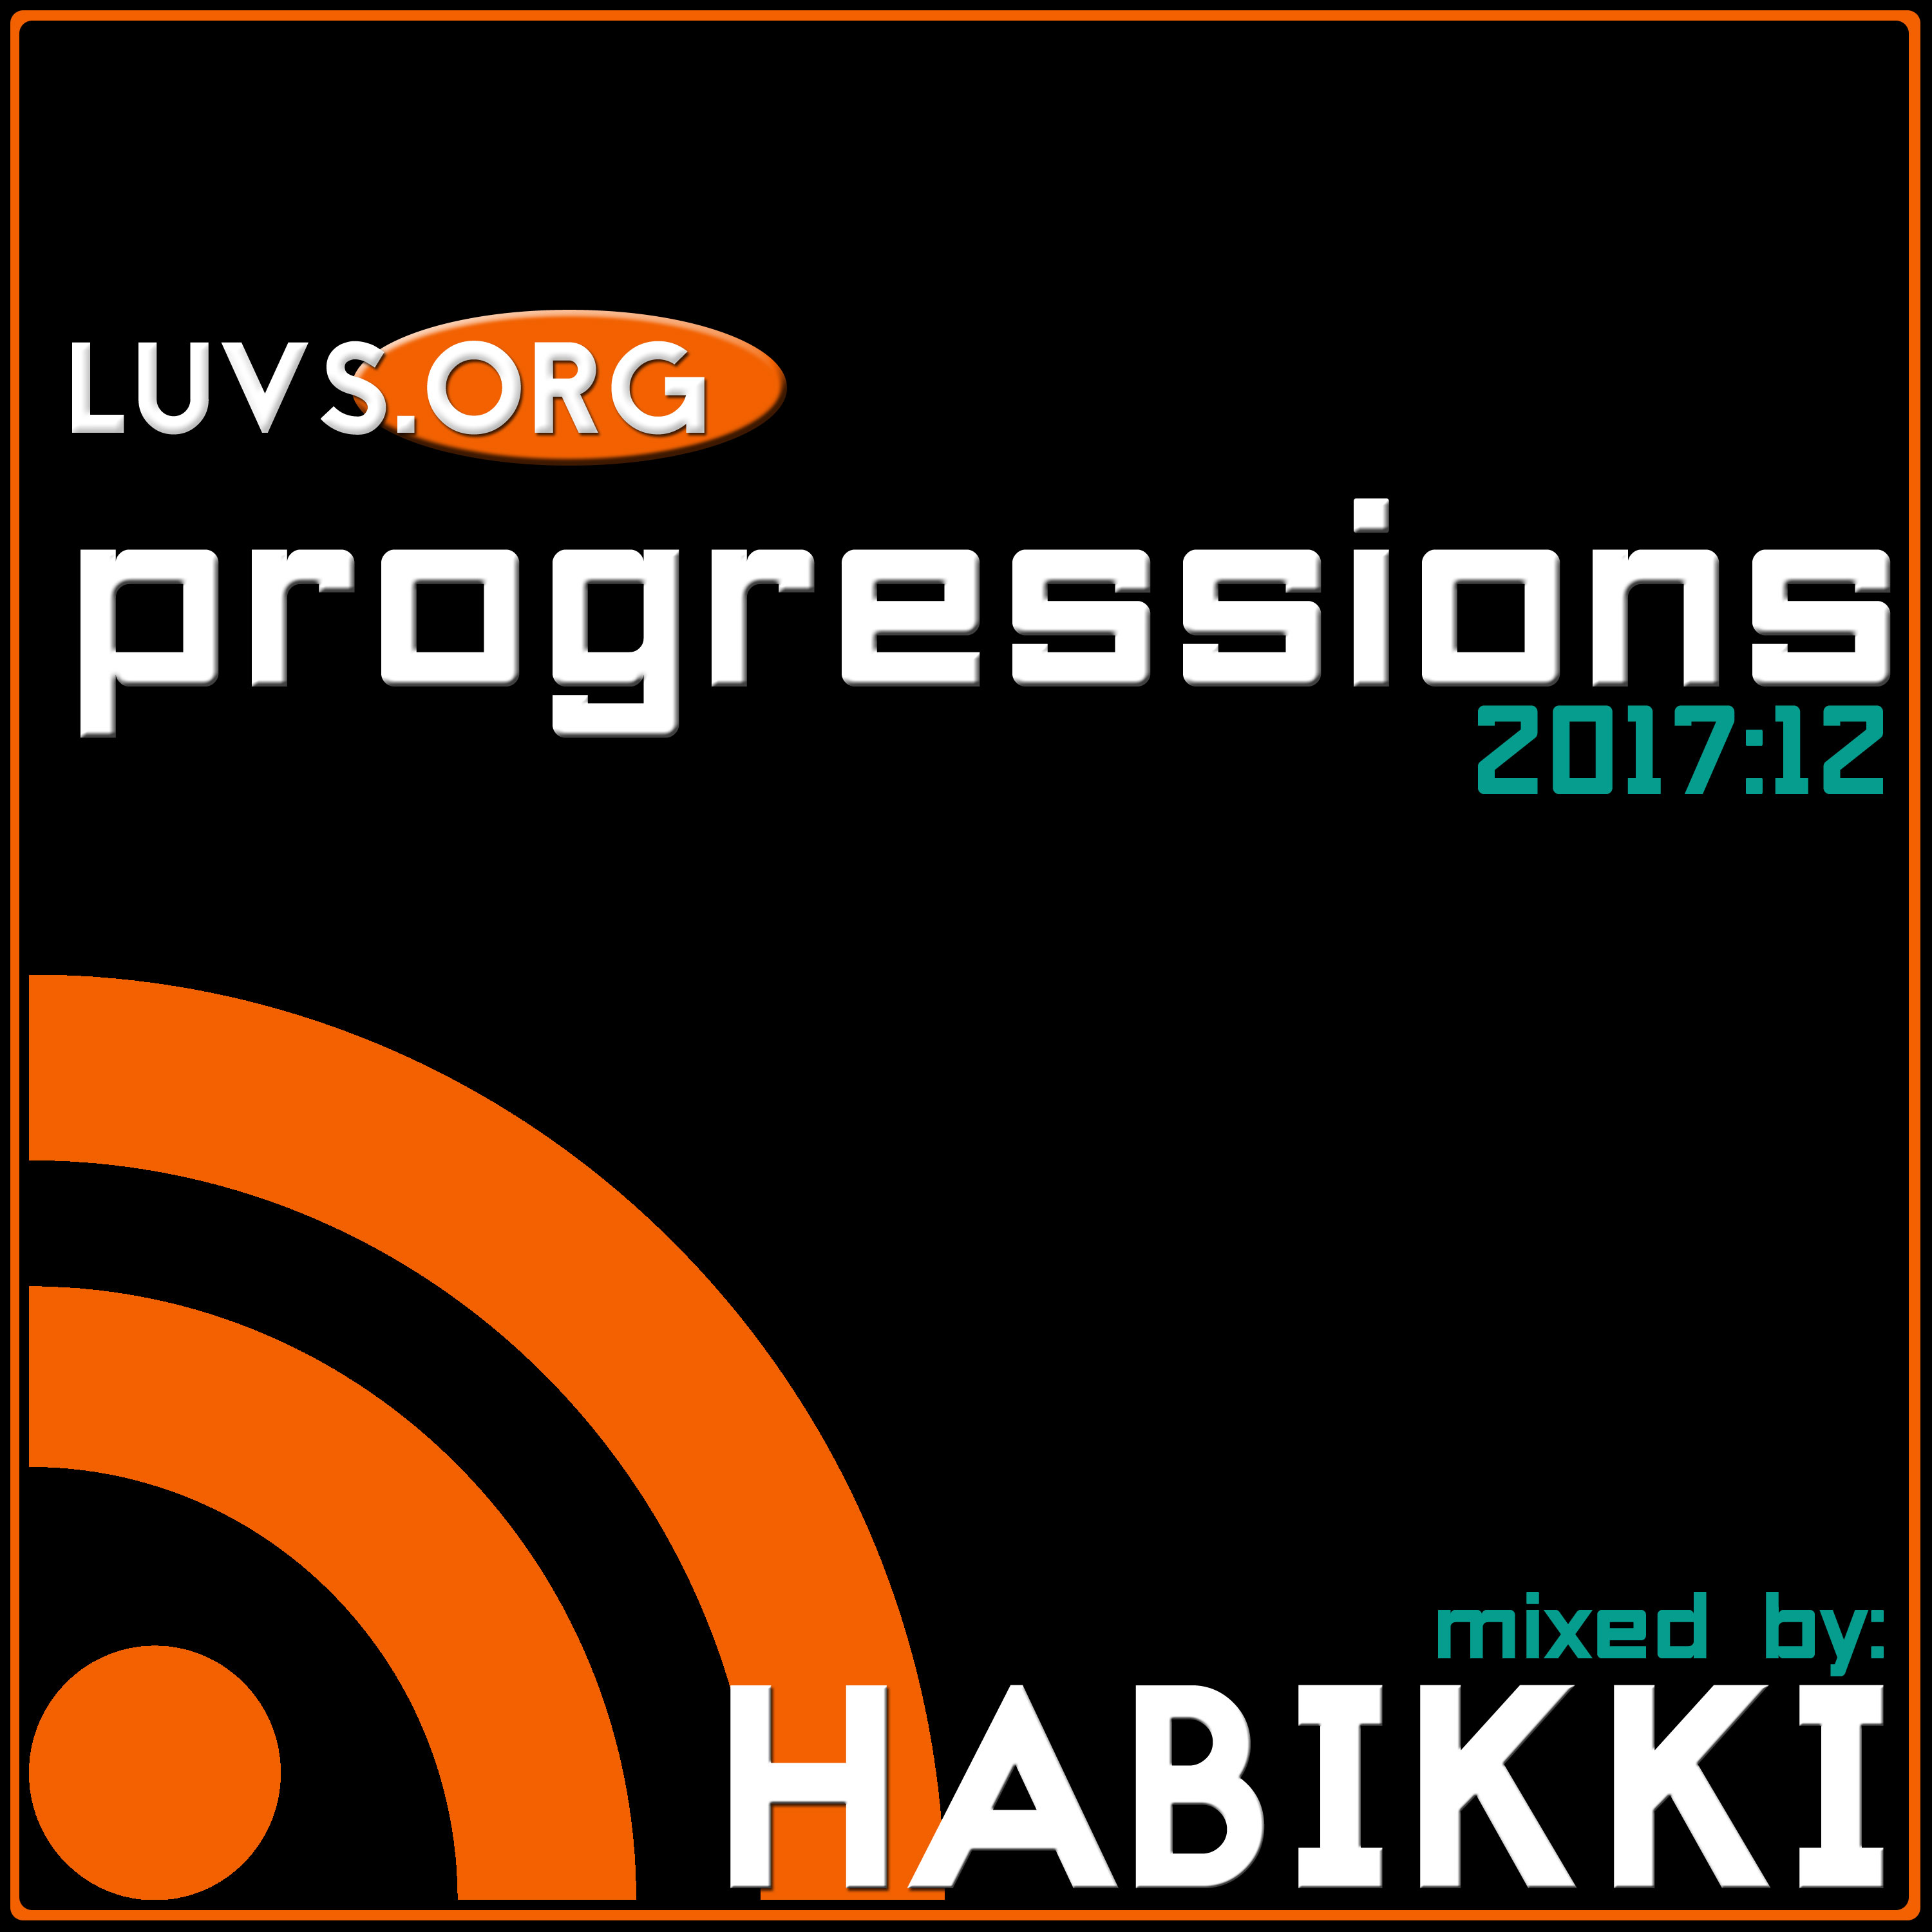 Luvs.org Sessions: [2017:12] Progressions